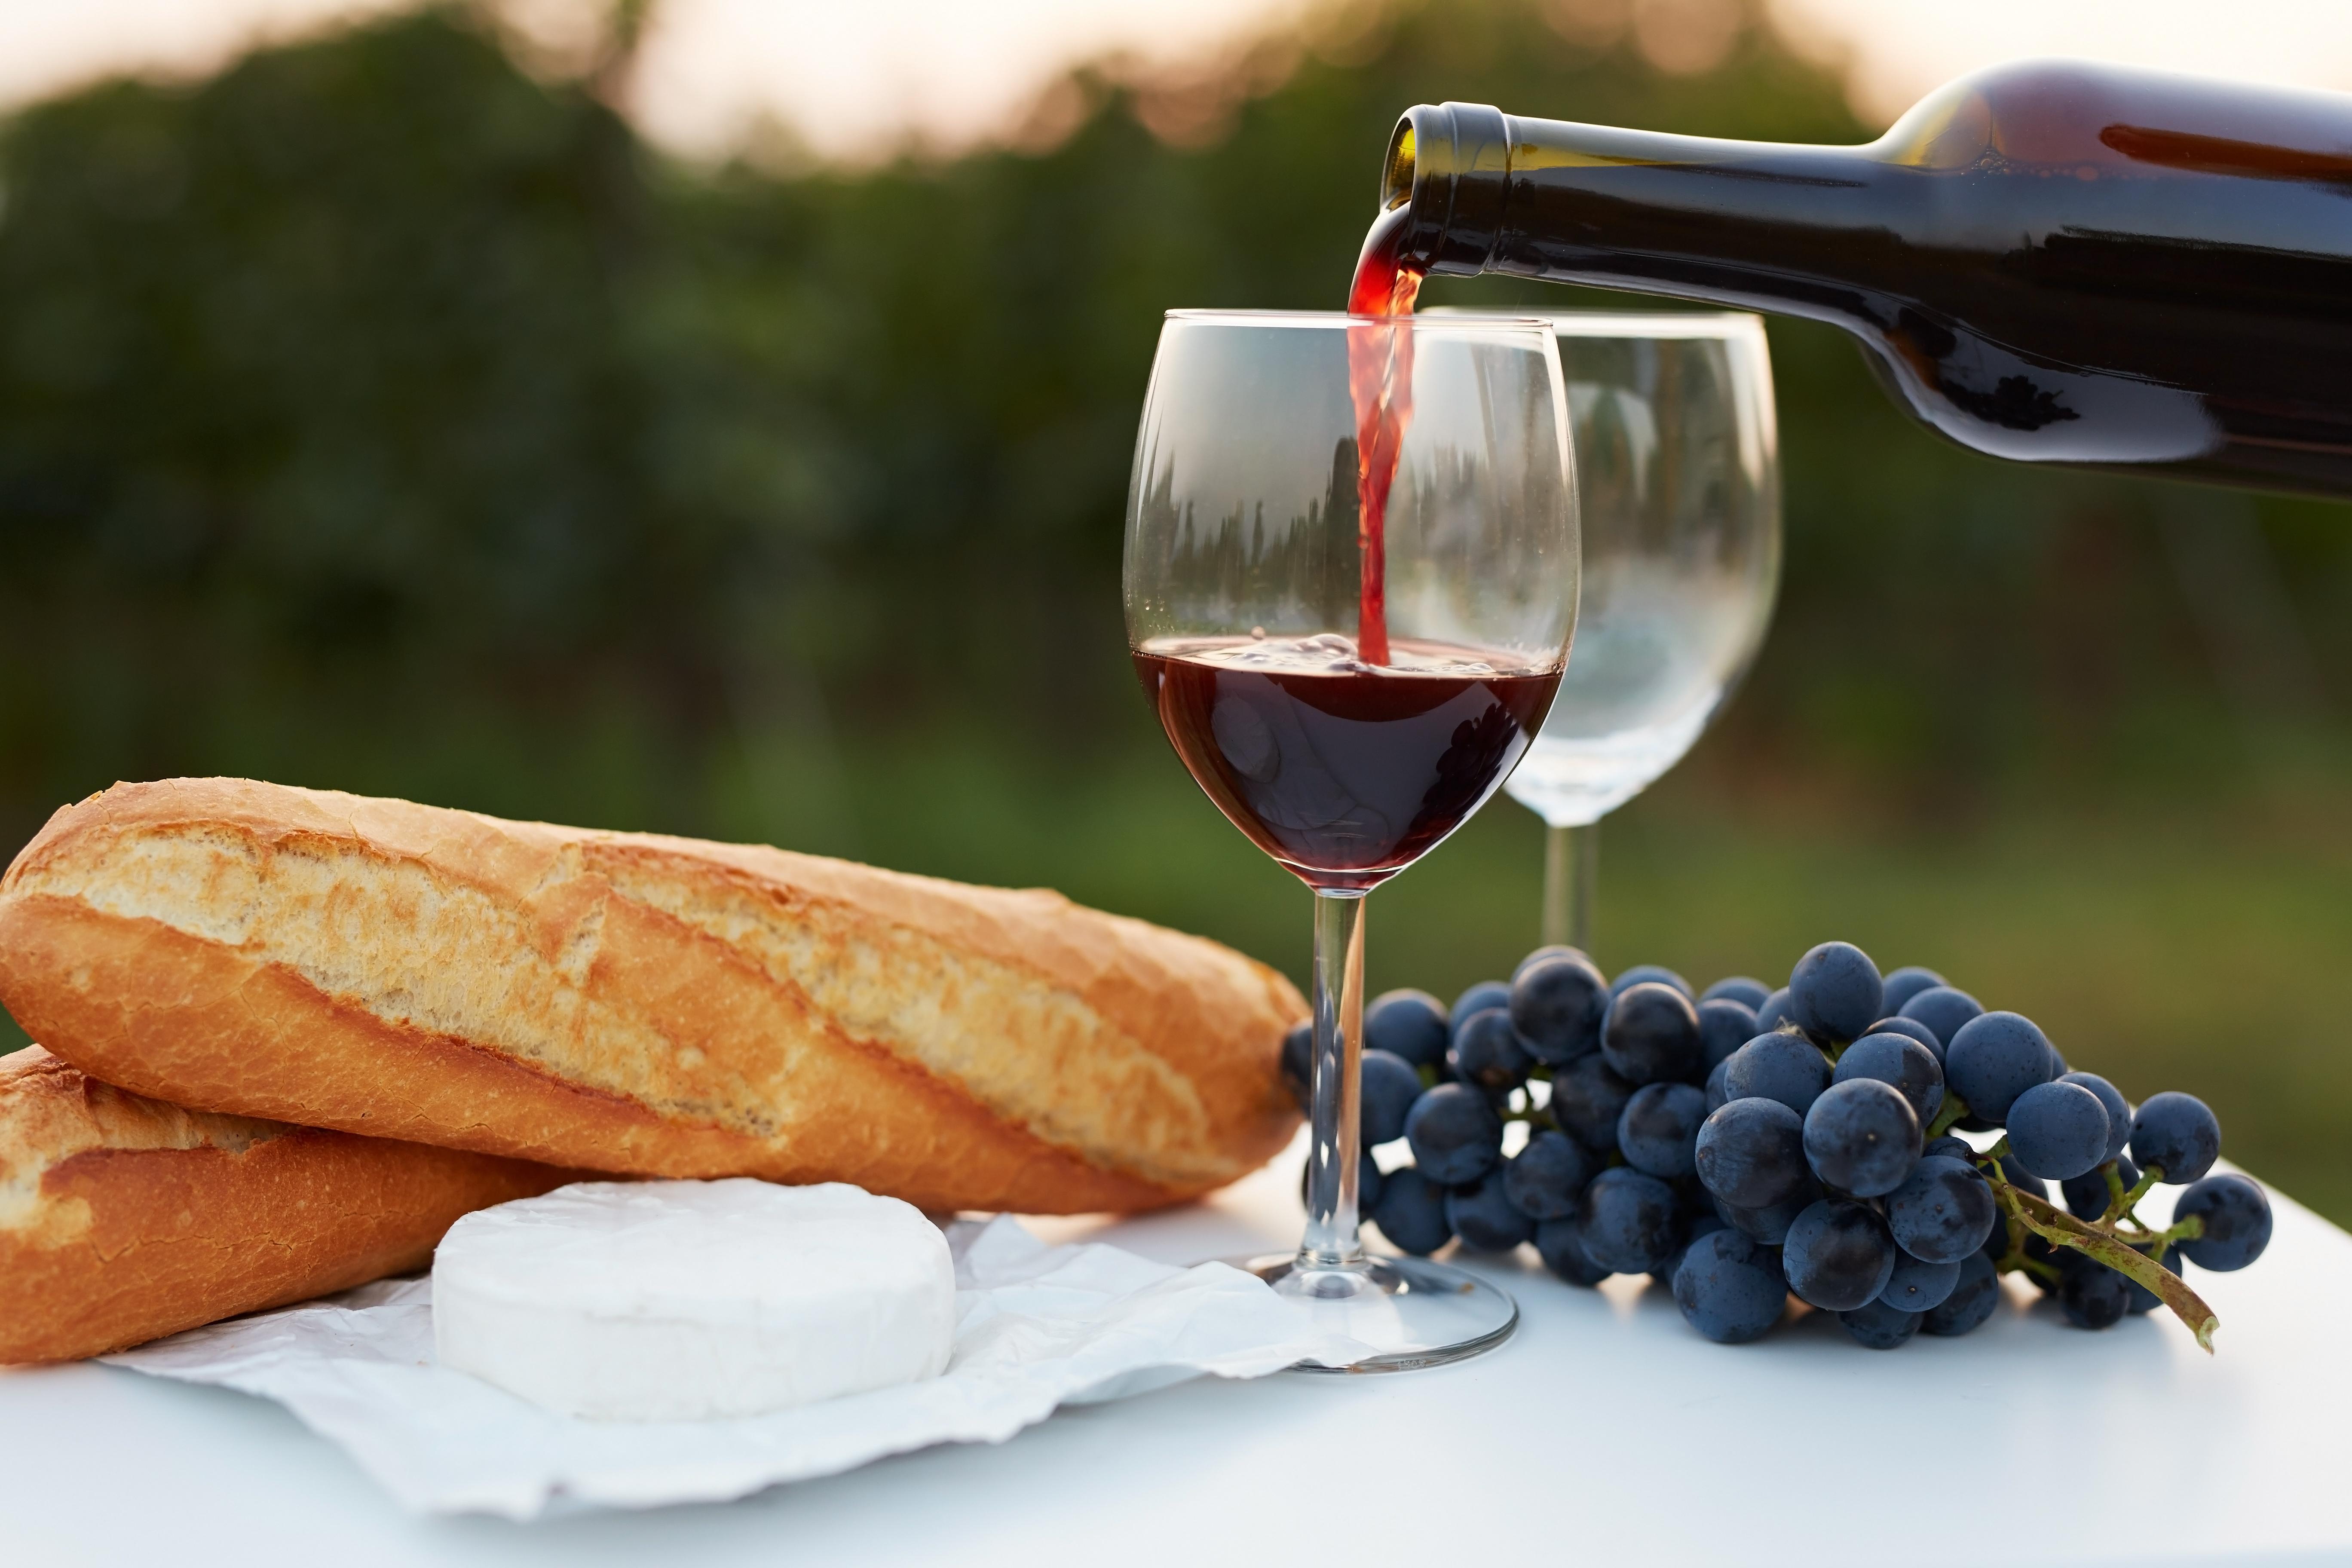 Bin 526 Presents: Patrick’s French Wine on Wednesday - The Jura Region 